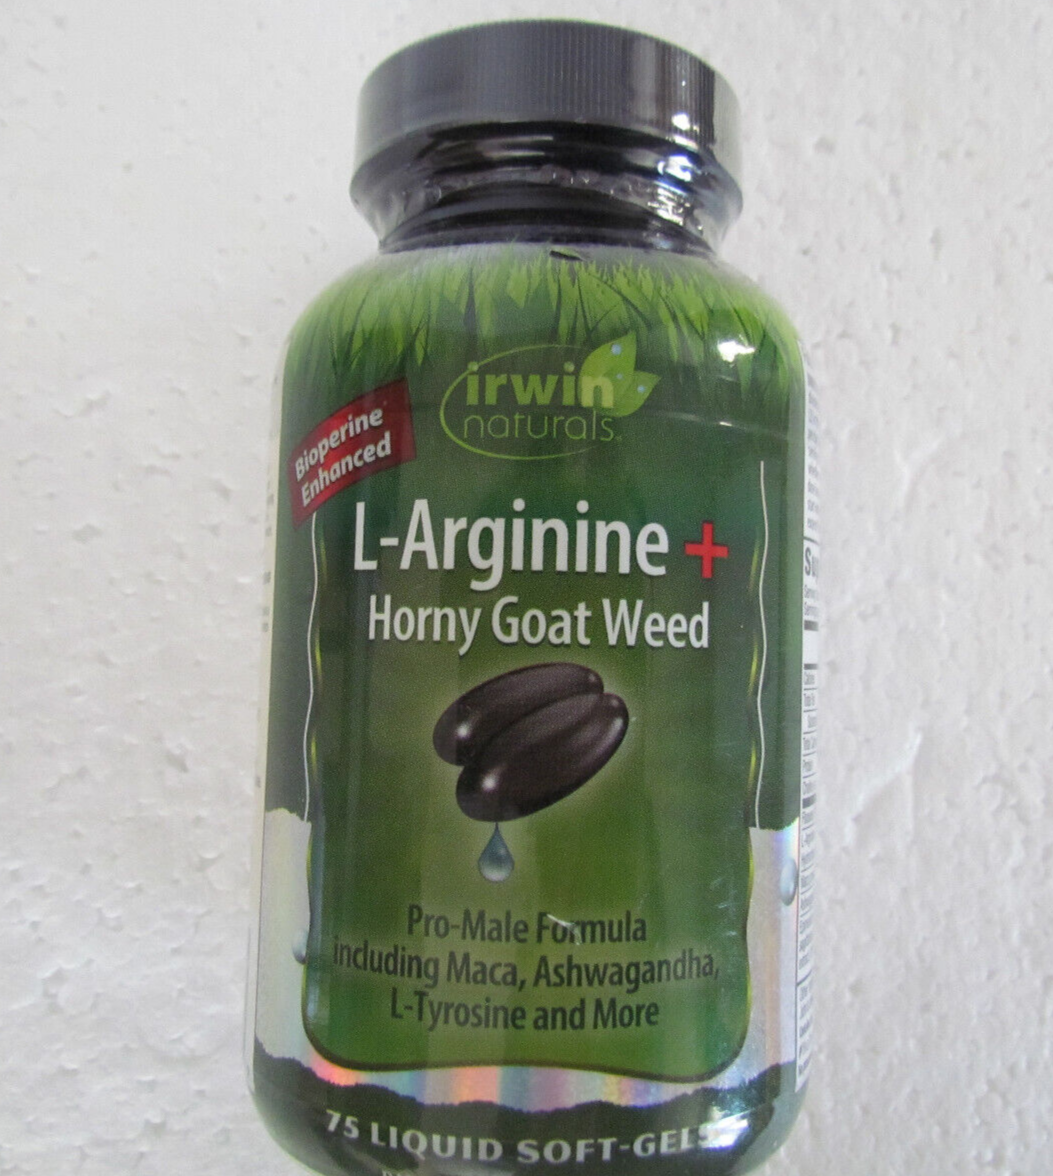 Irwin Naturals L-Arginine + Horny Goat Weed Pro-Male Formula 75 Soft Gels 12/24 - $16.95